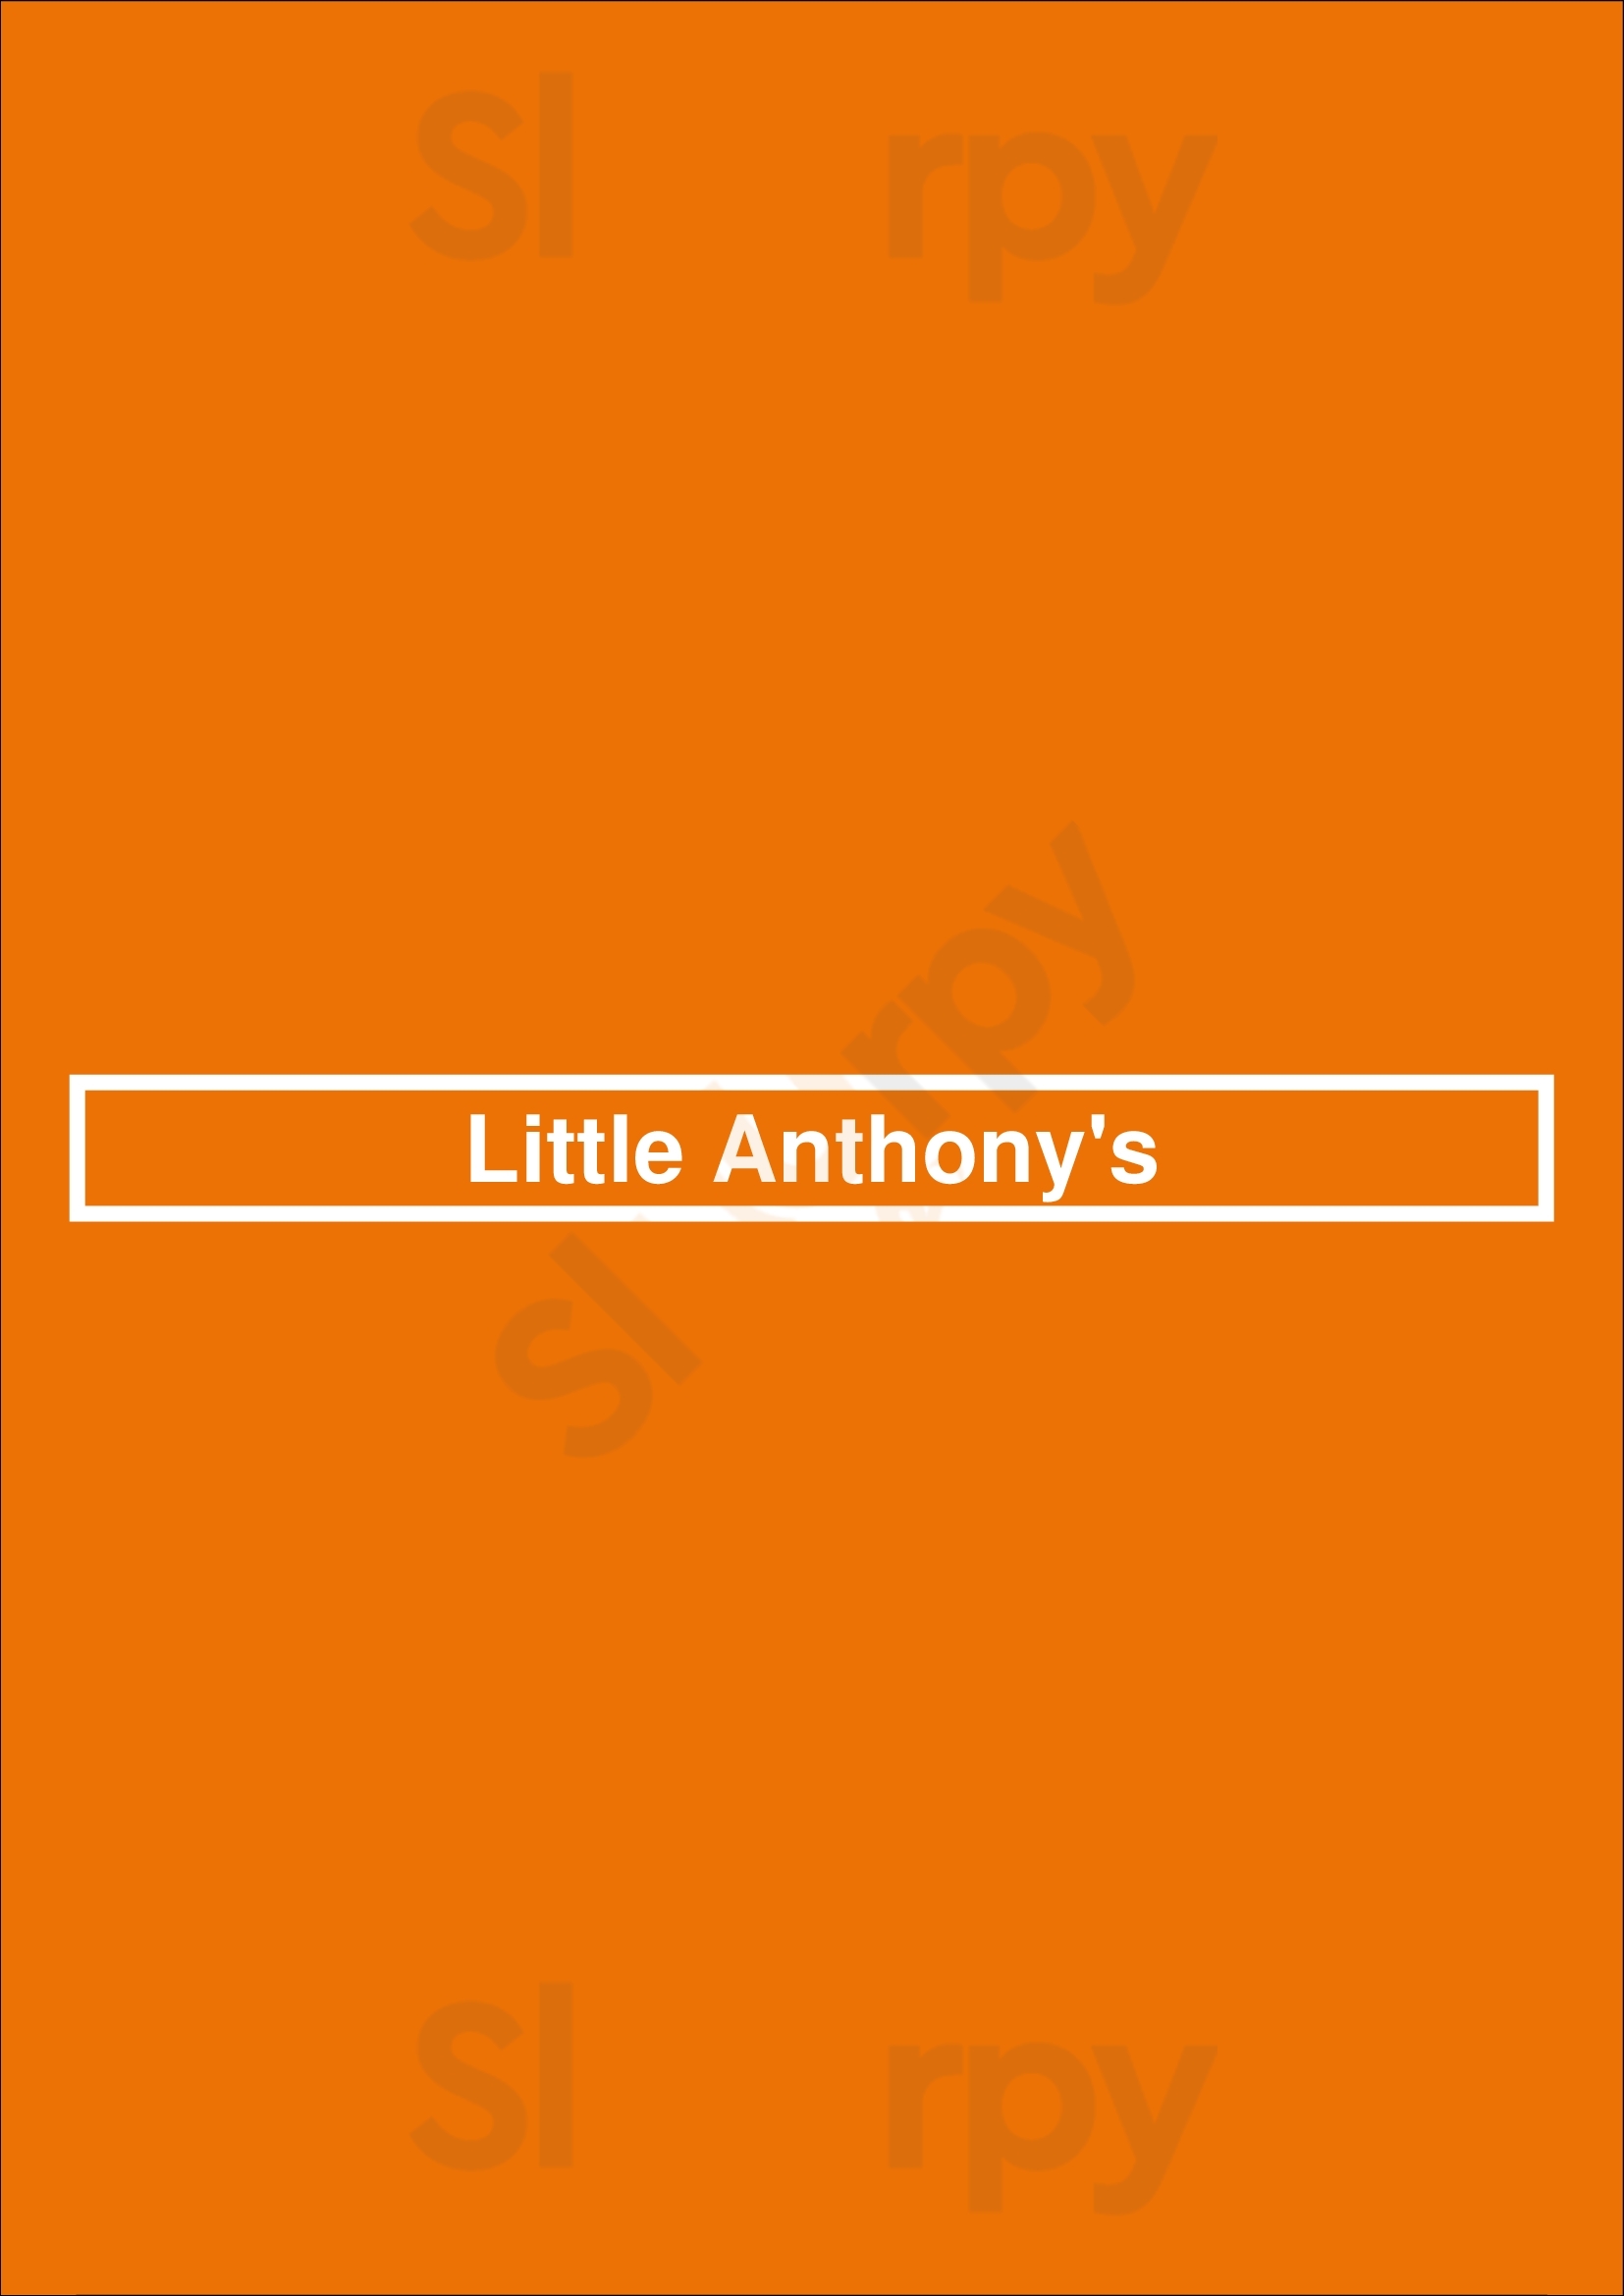 Little Anthony's Toronto Menu - 1